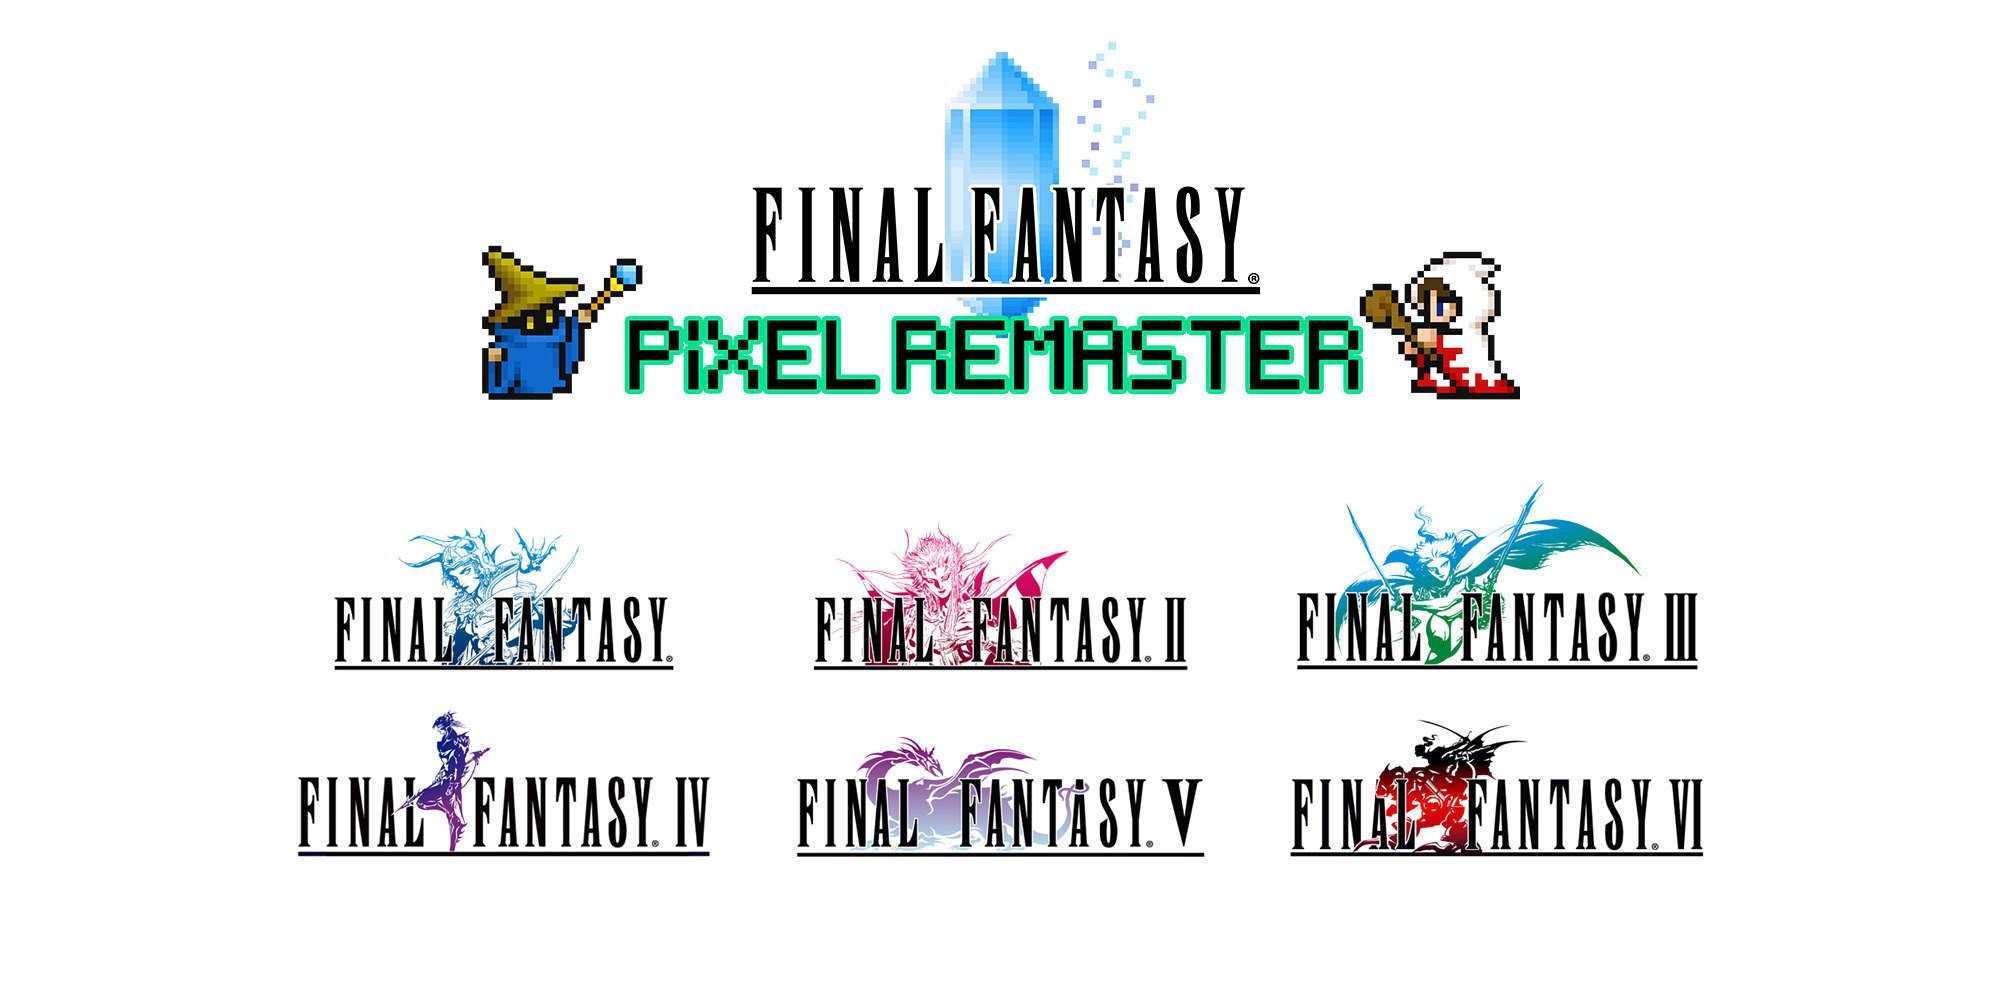 final-fantasy-pixel-remaster-promo-art-1212153